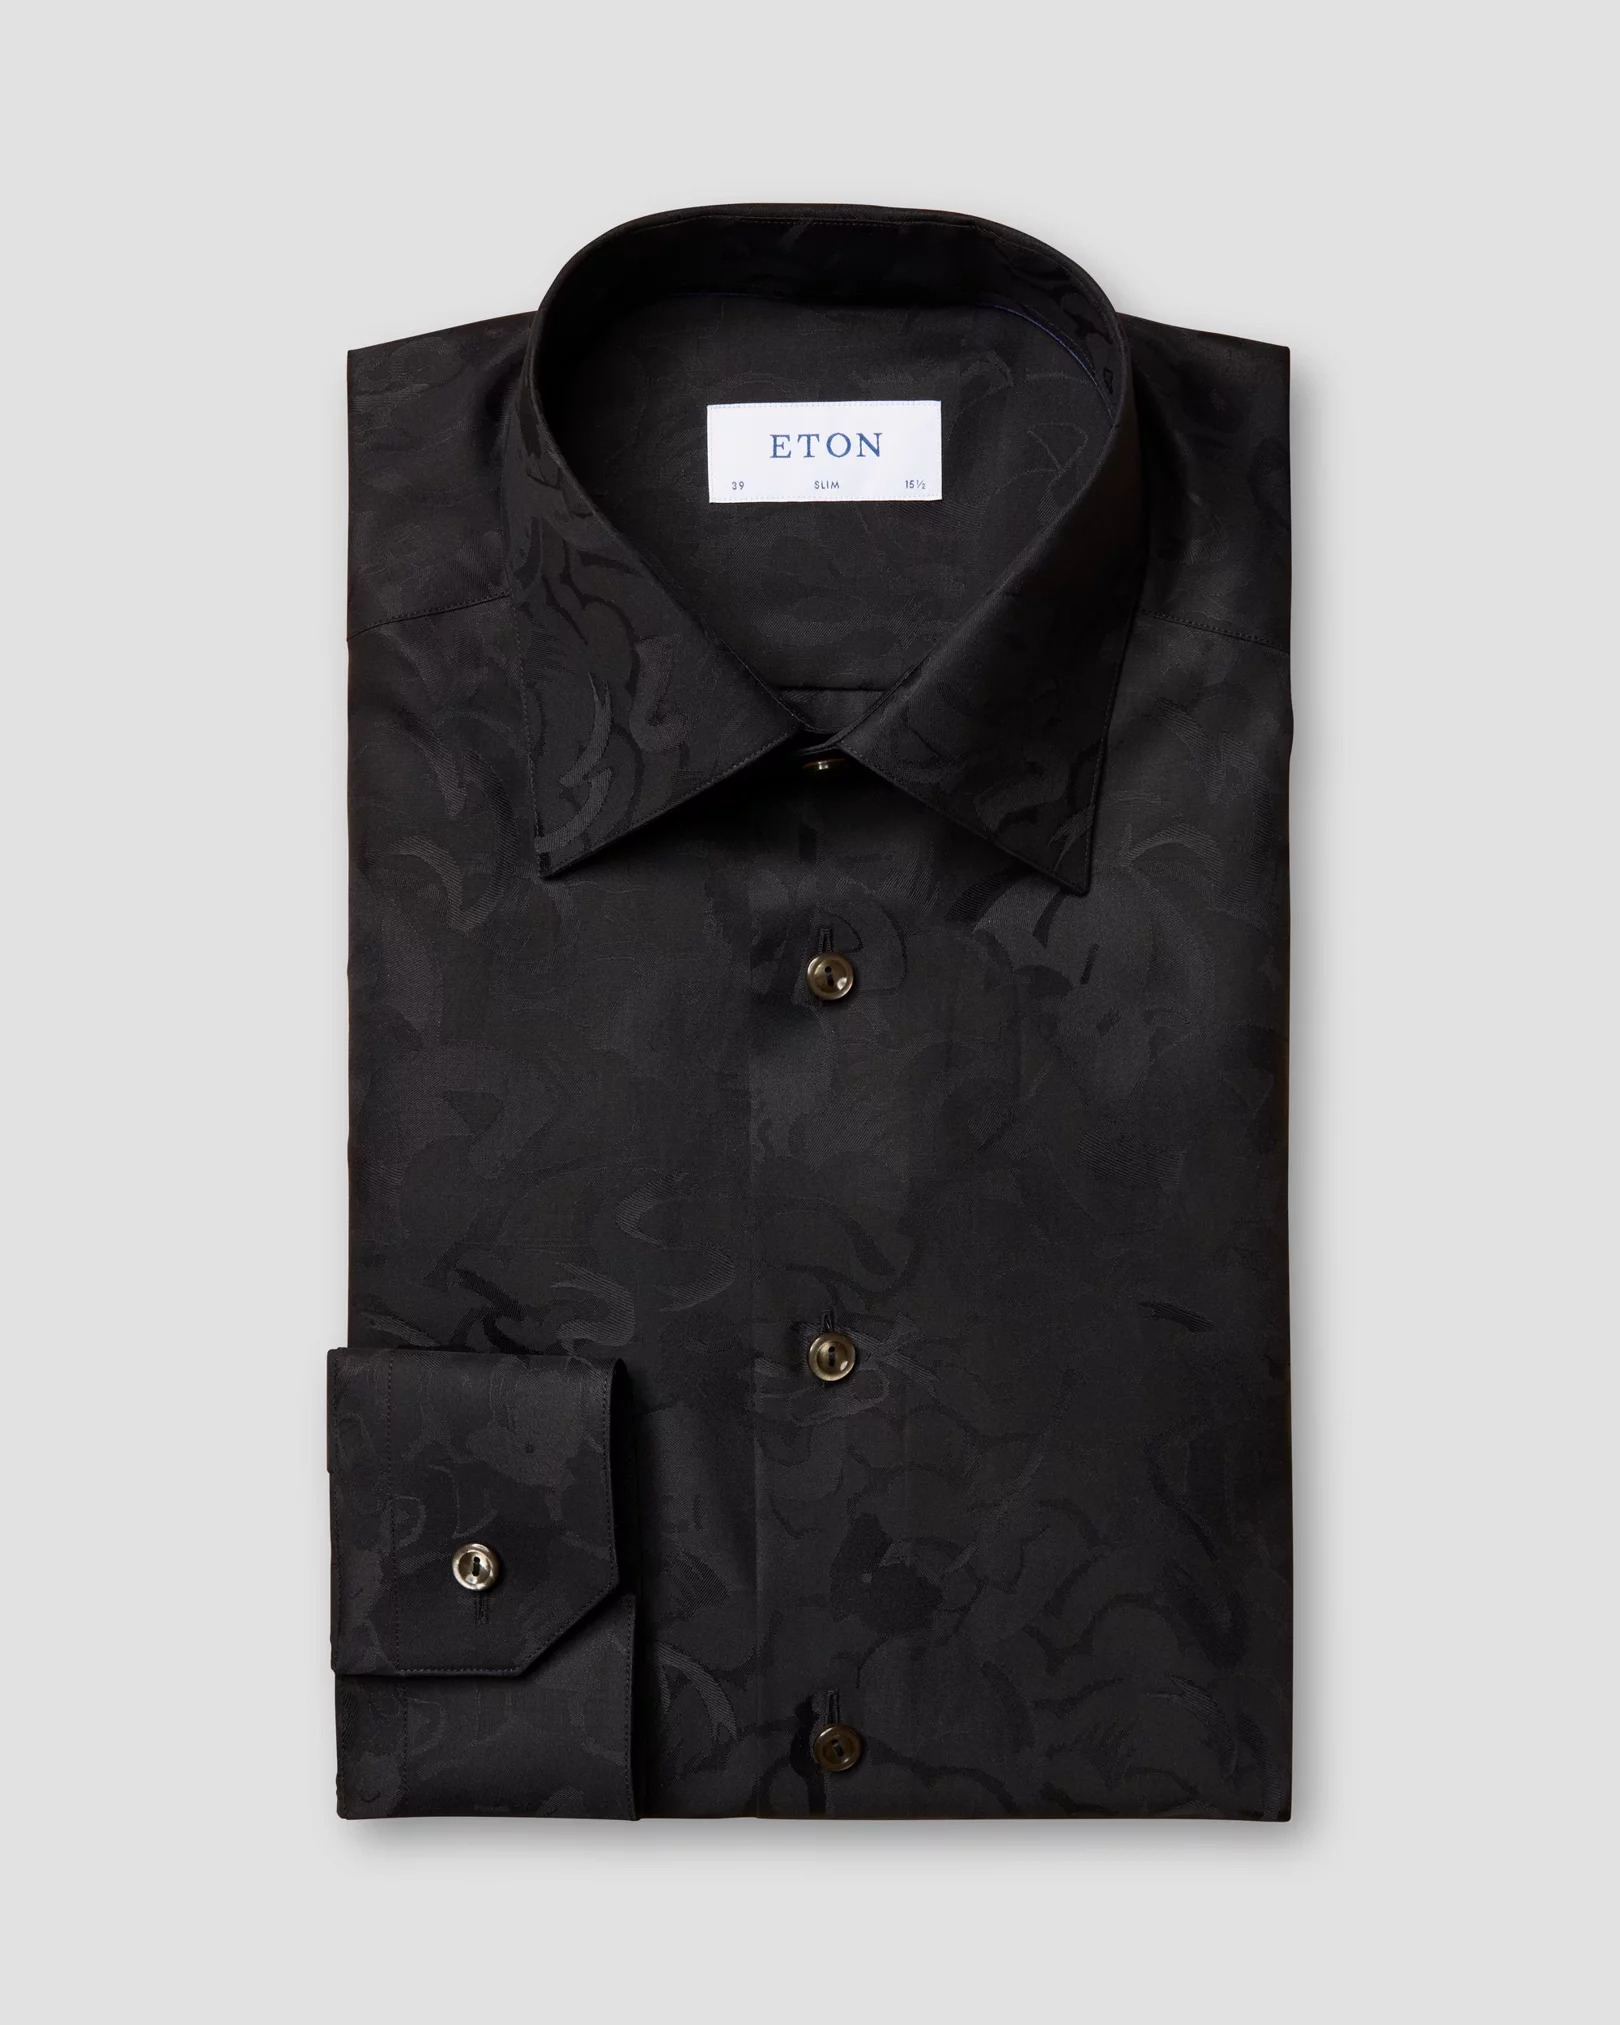 Eton - black floral jacquard shirt